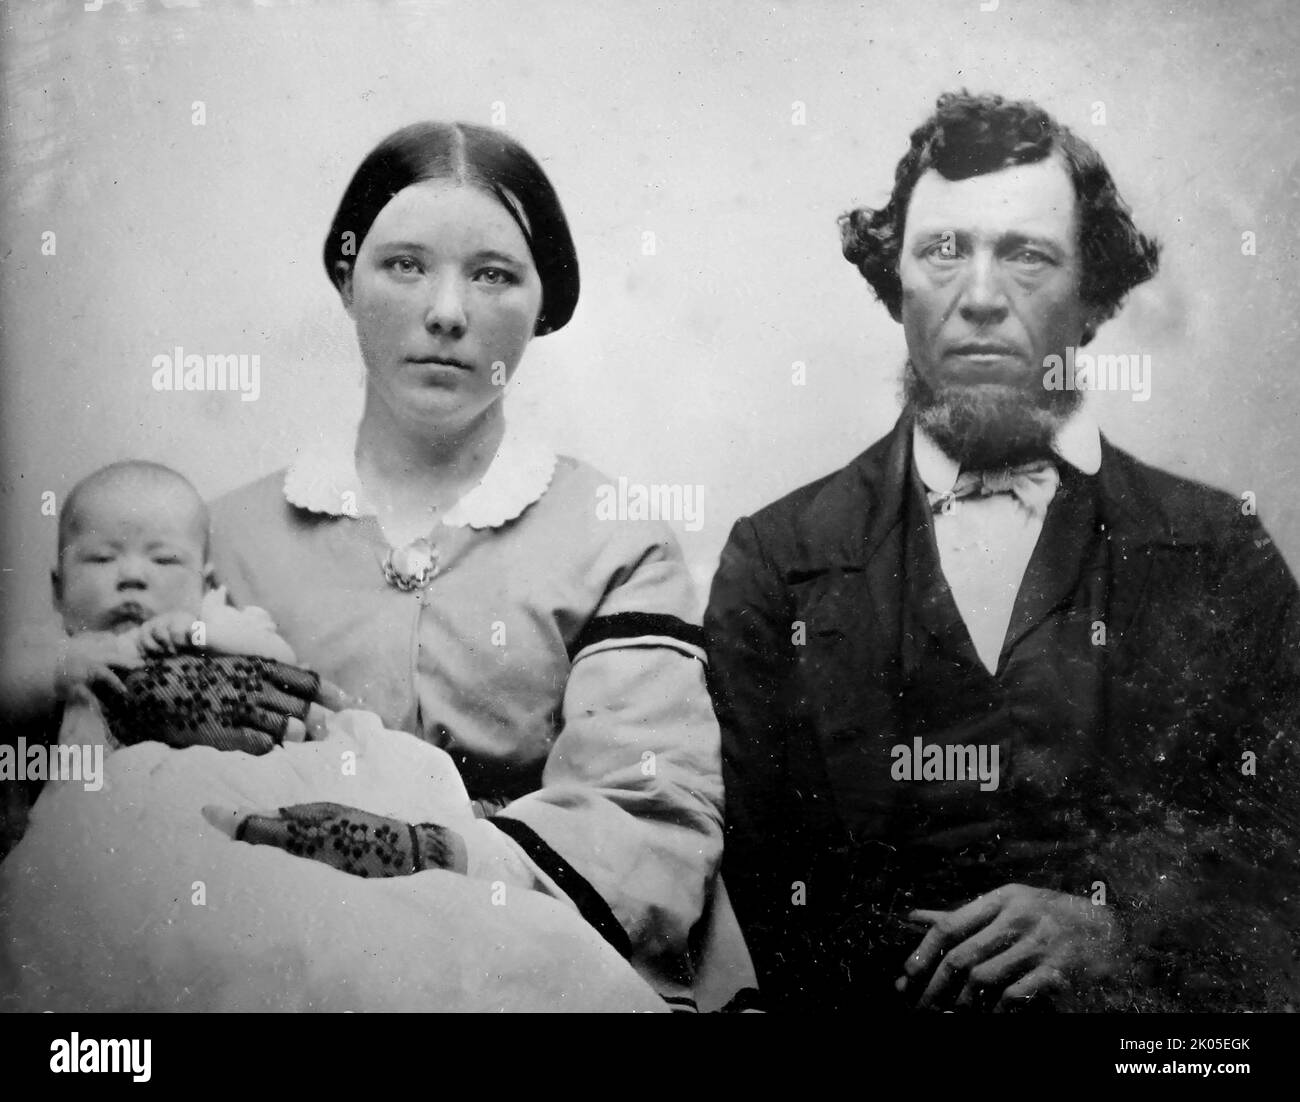 A young family daguerreotype portrait, ca. 1860s. Stock Photo